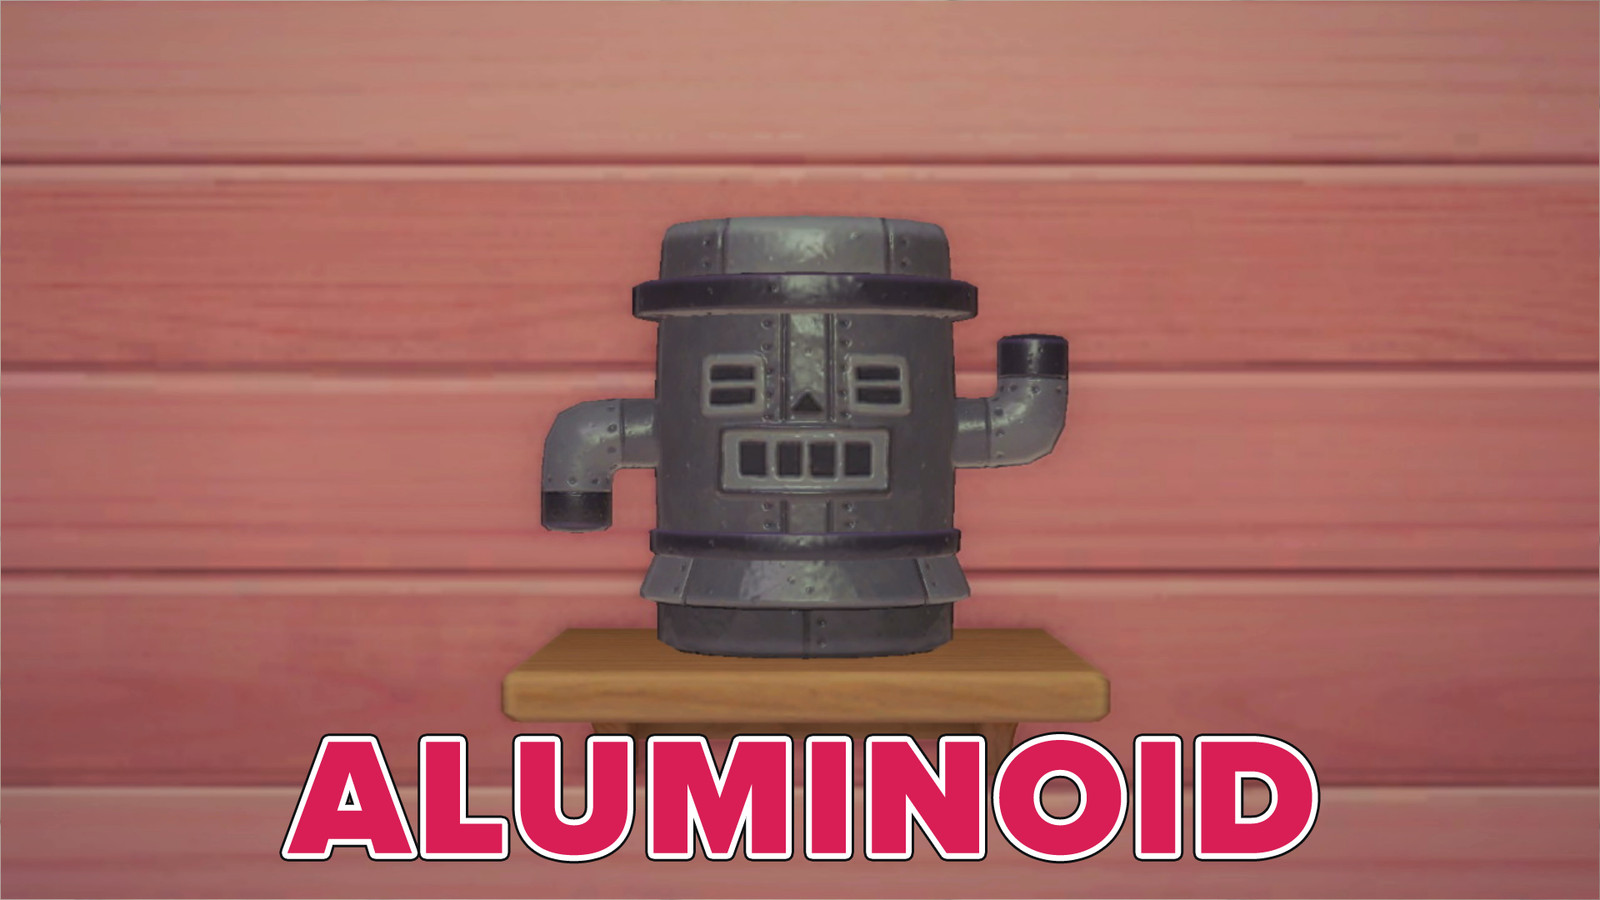 Aluminoid